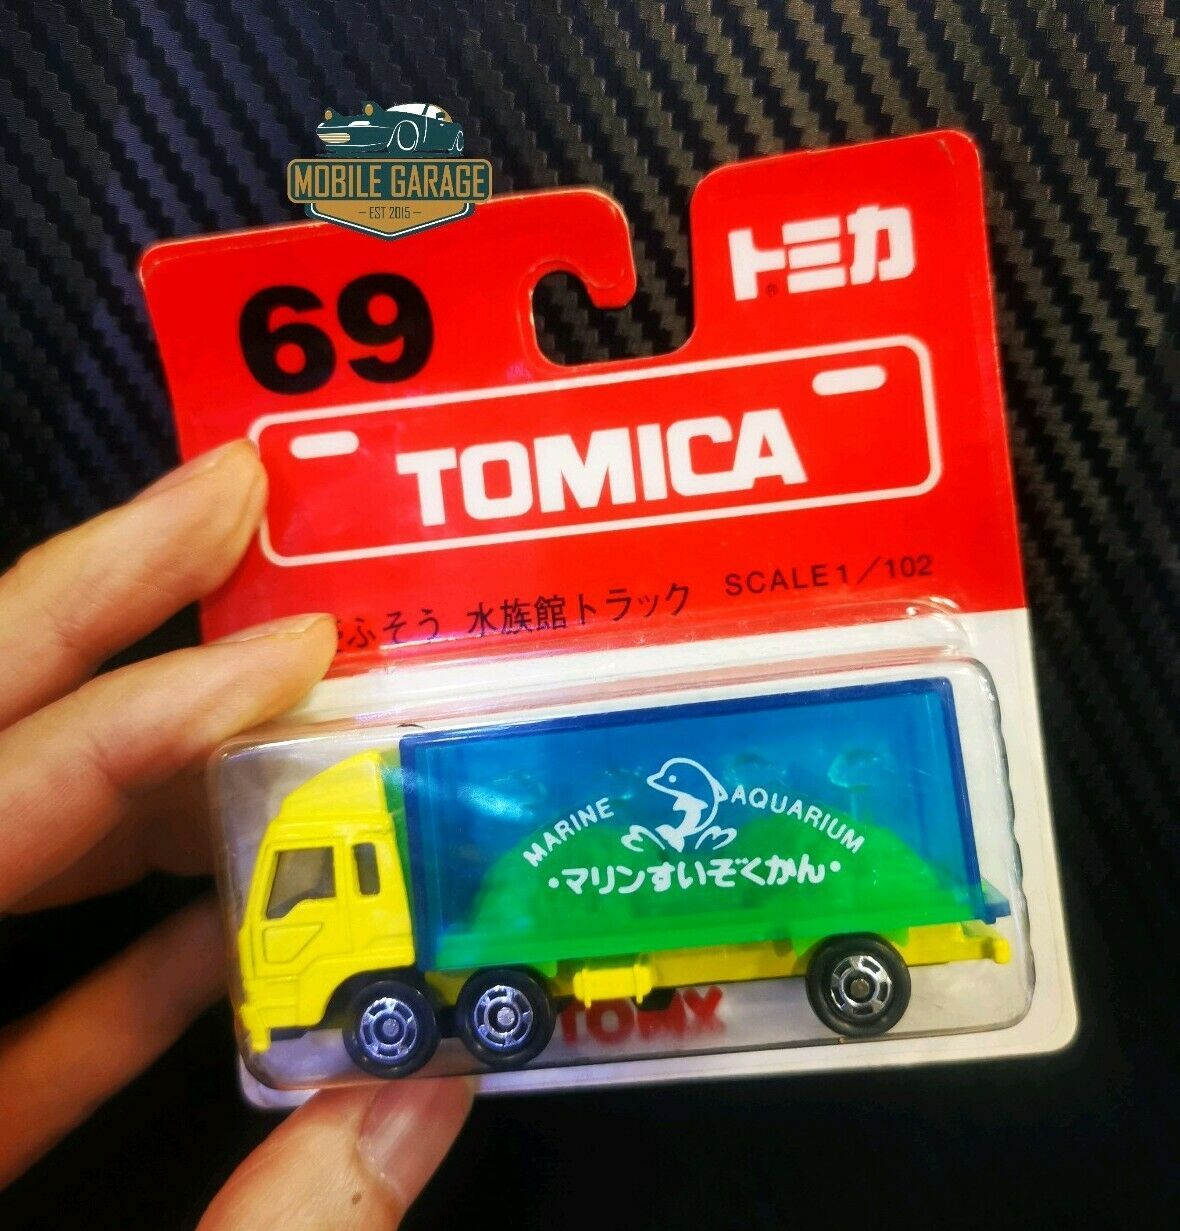 TOMICA #69 Mitsubishi Fuso Aquarium Truck 1:102 SCALE NEW IN BOX